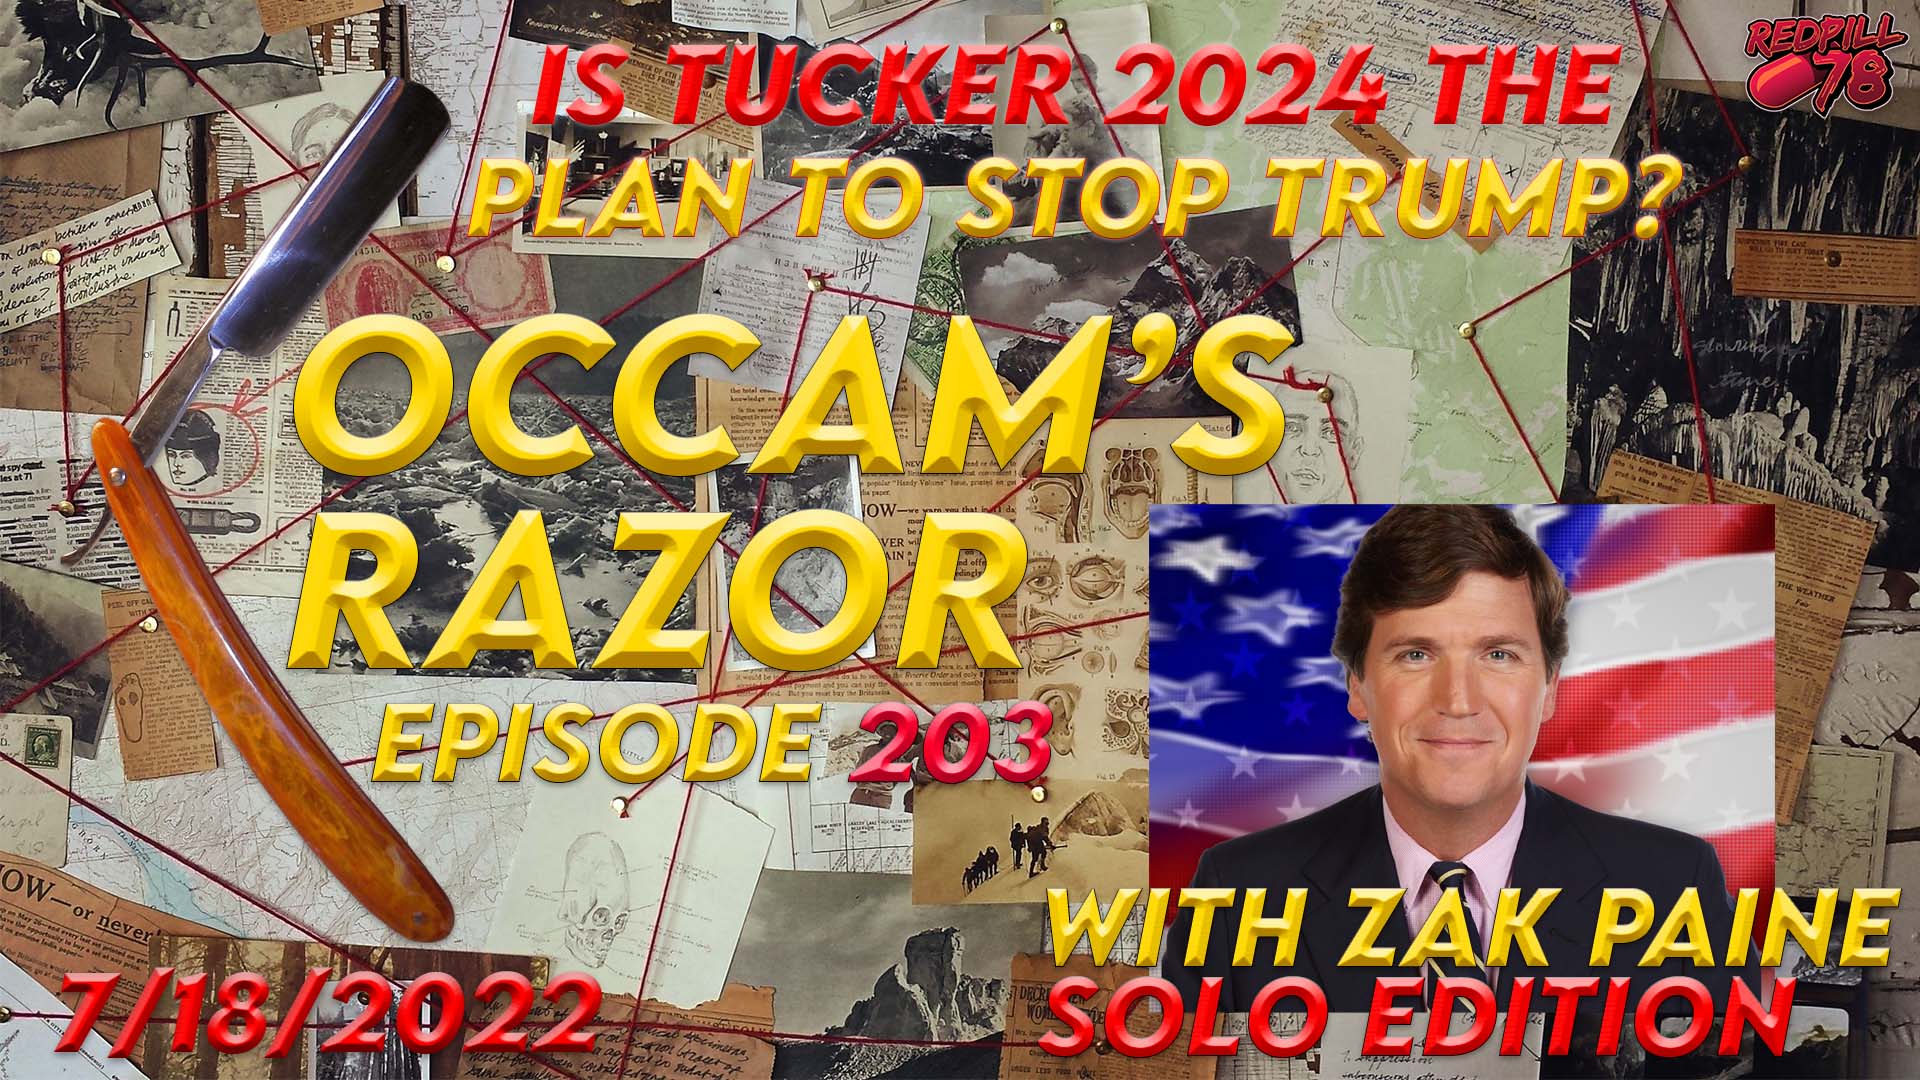 IS TUCKER FLIRTING WITH 2024? Zak Paine on Occam’s Razor Ep. 203